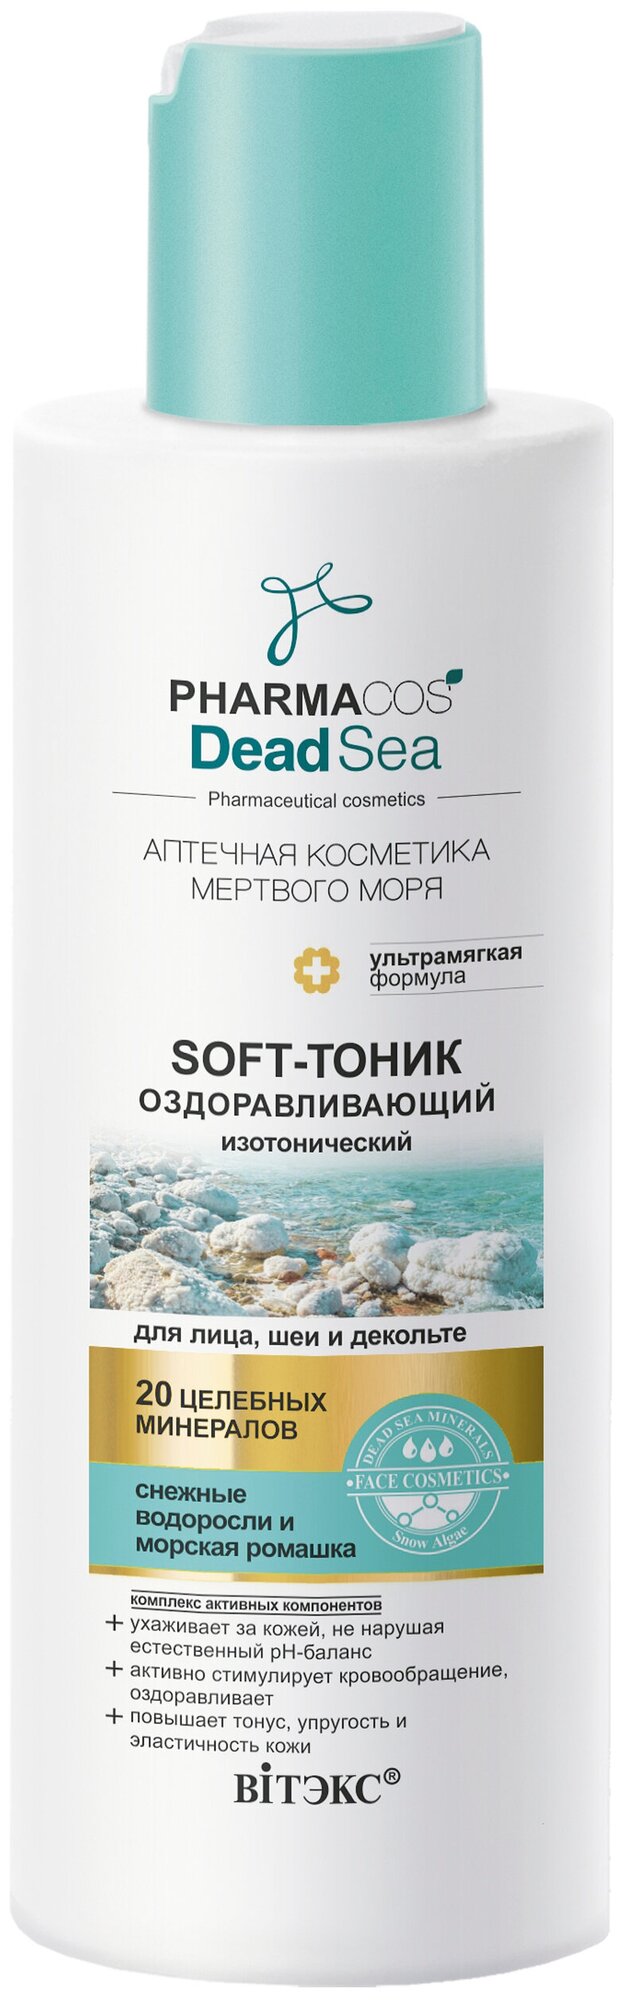 Витэкс Soft-тоник оздоравливающий изотонический PHARMACos Dead Sea